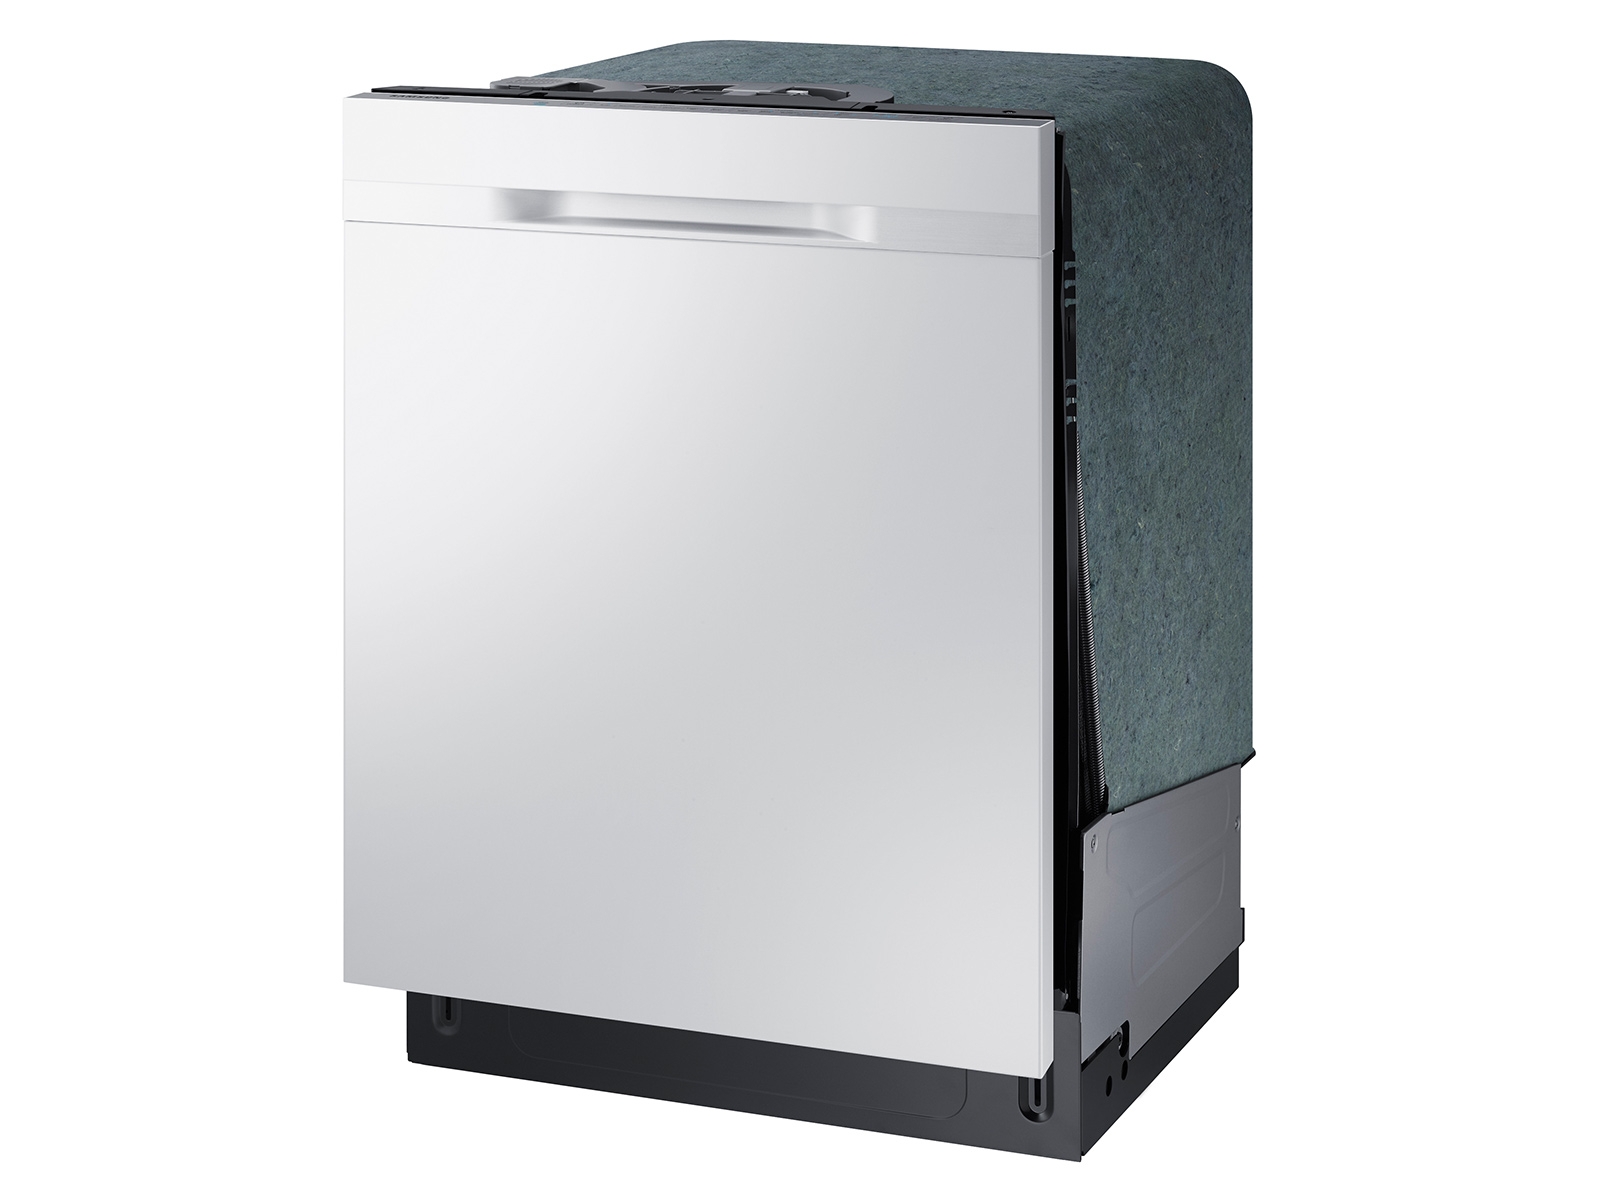 Dishwasher Installation Mount Bracket Compatible With Samsung